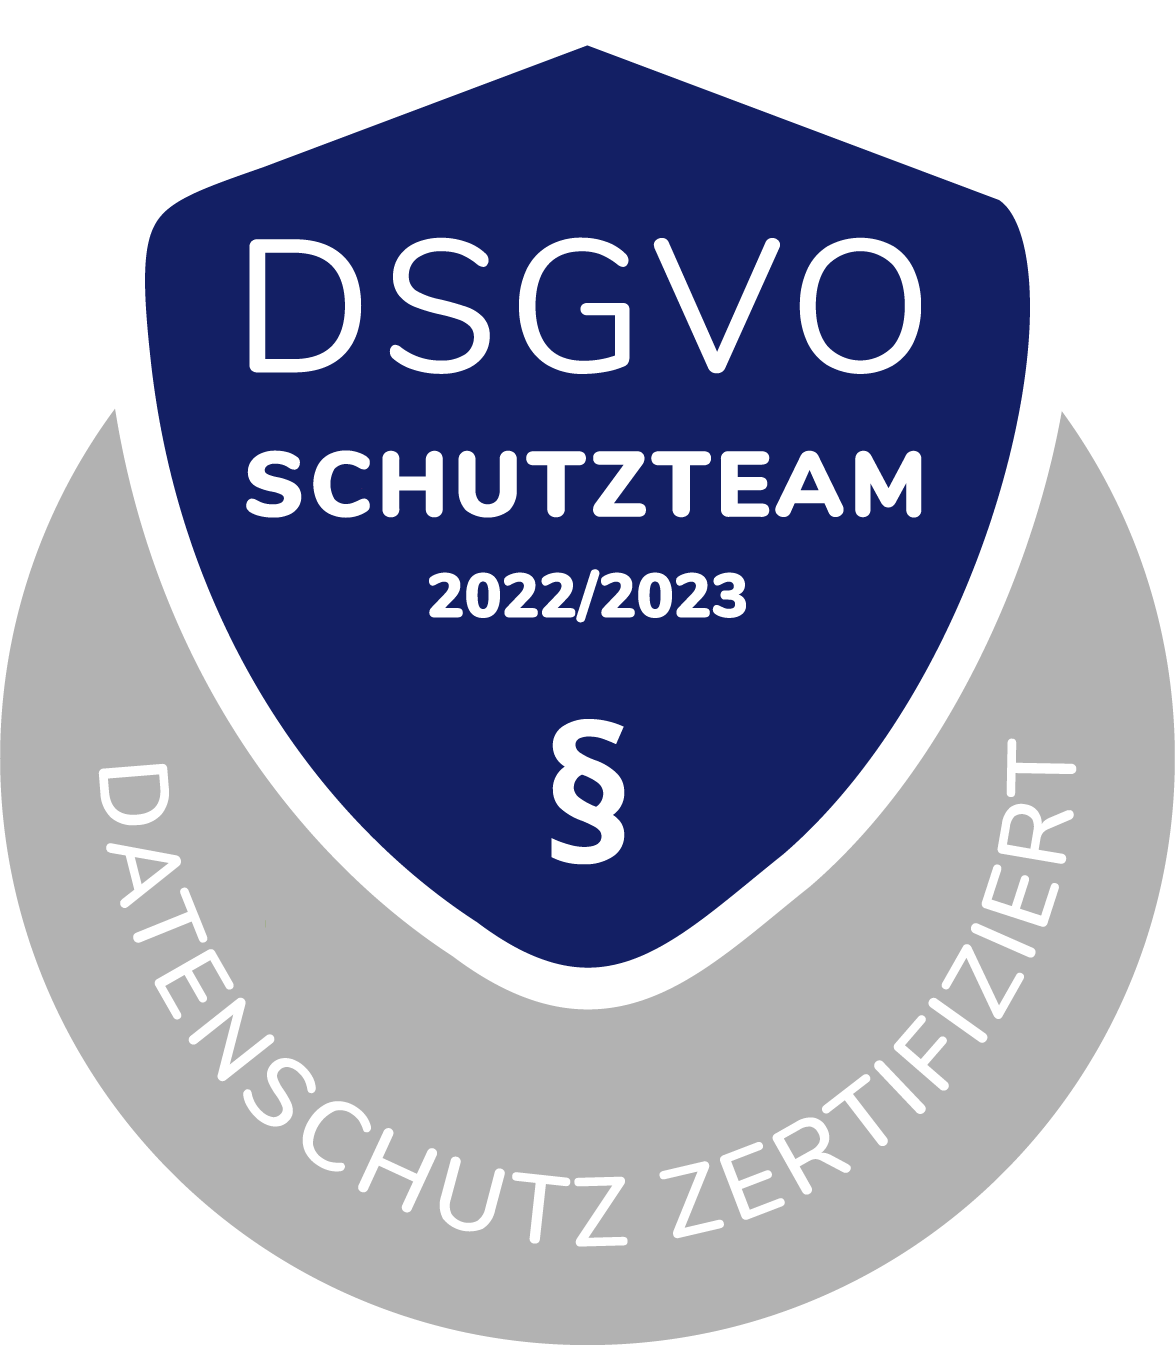 Datenschutz Zertifi kat - DSGVO Schutzteam - www.dsgvoschutzteam.com